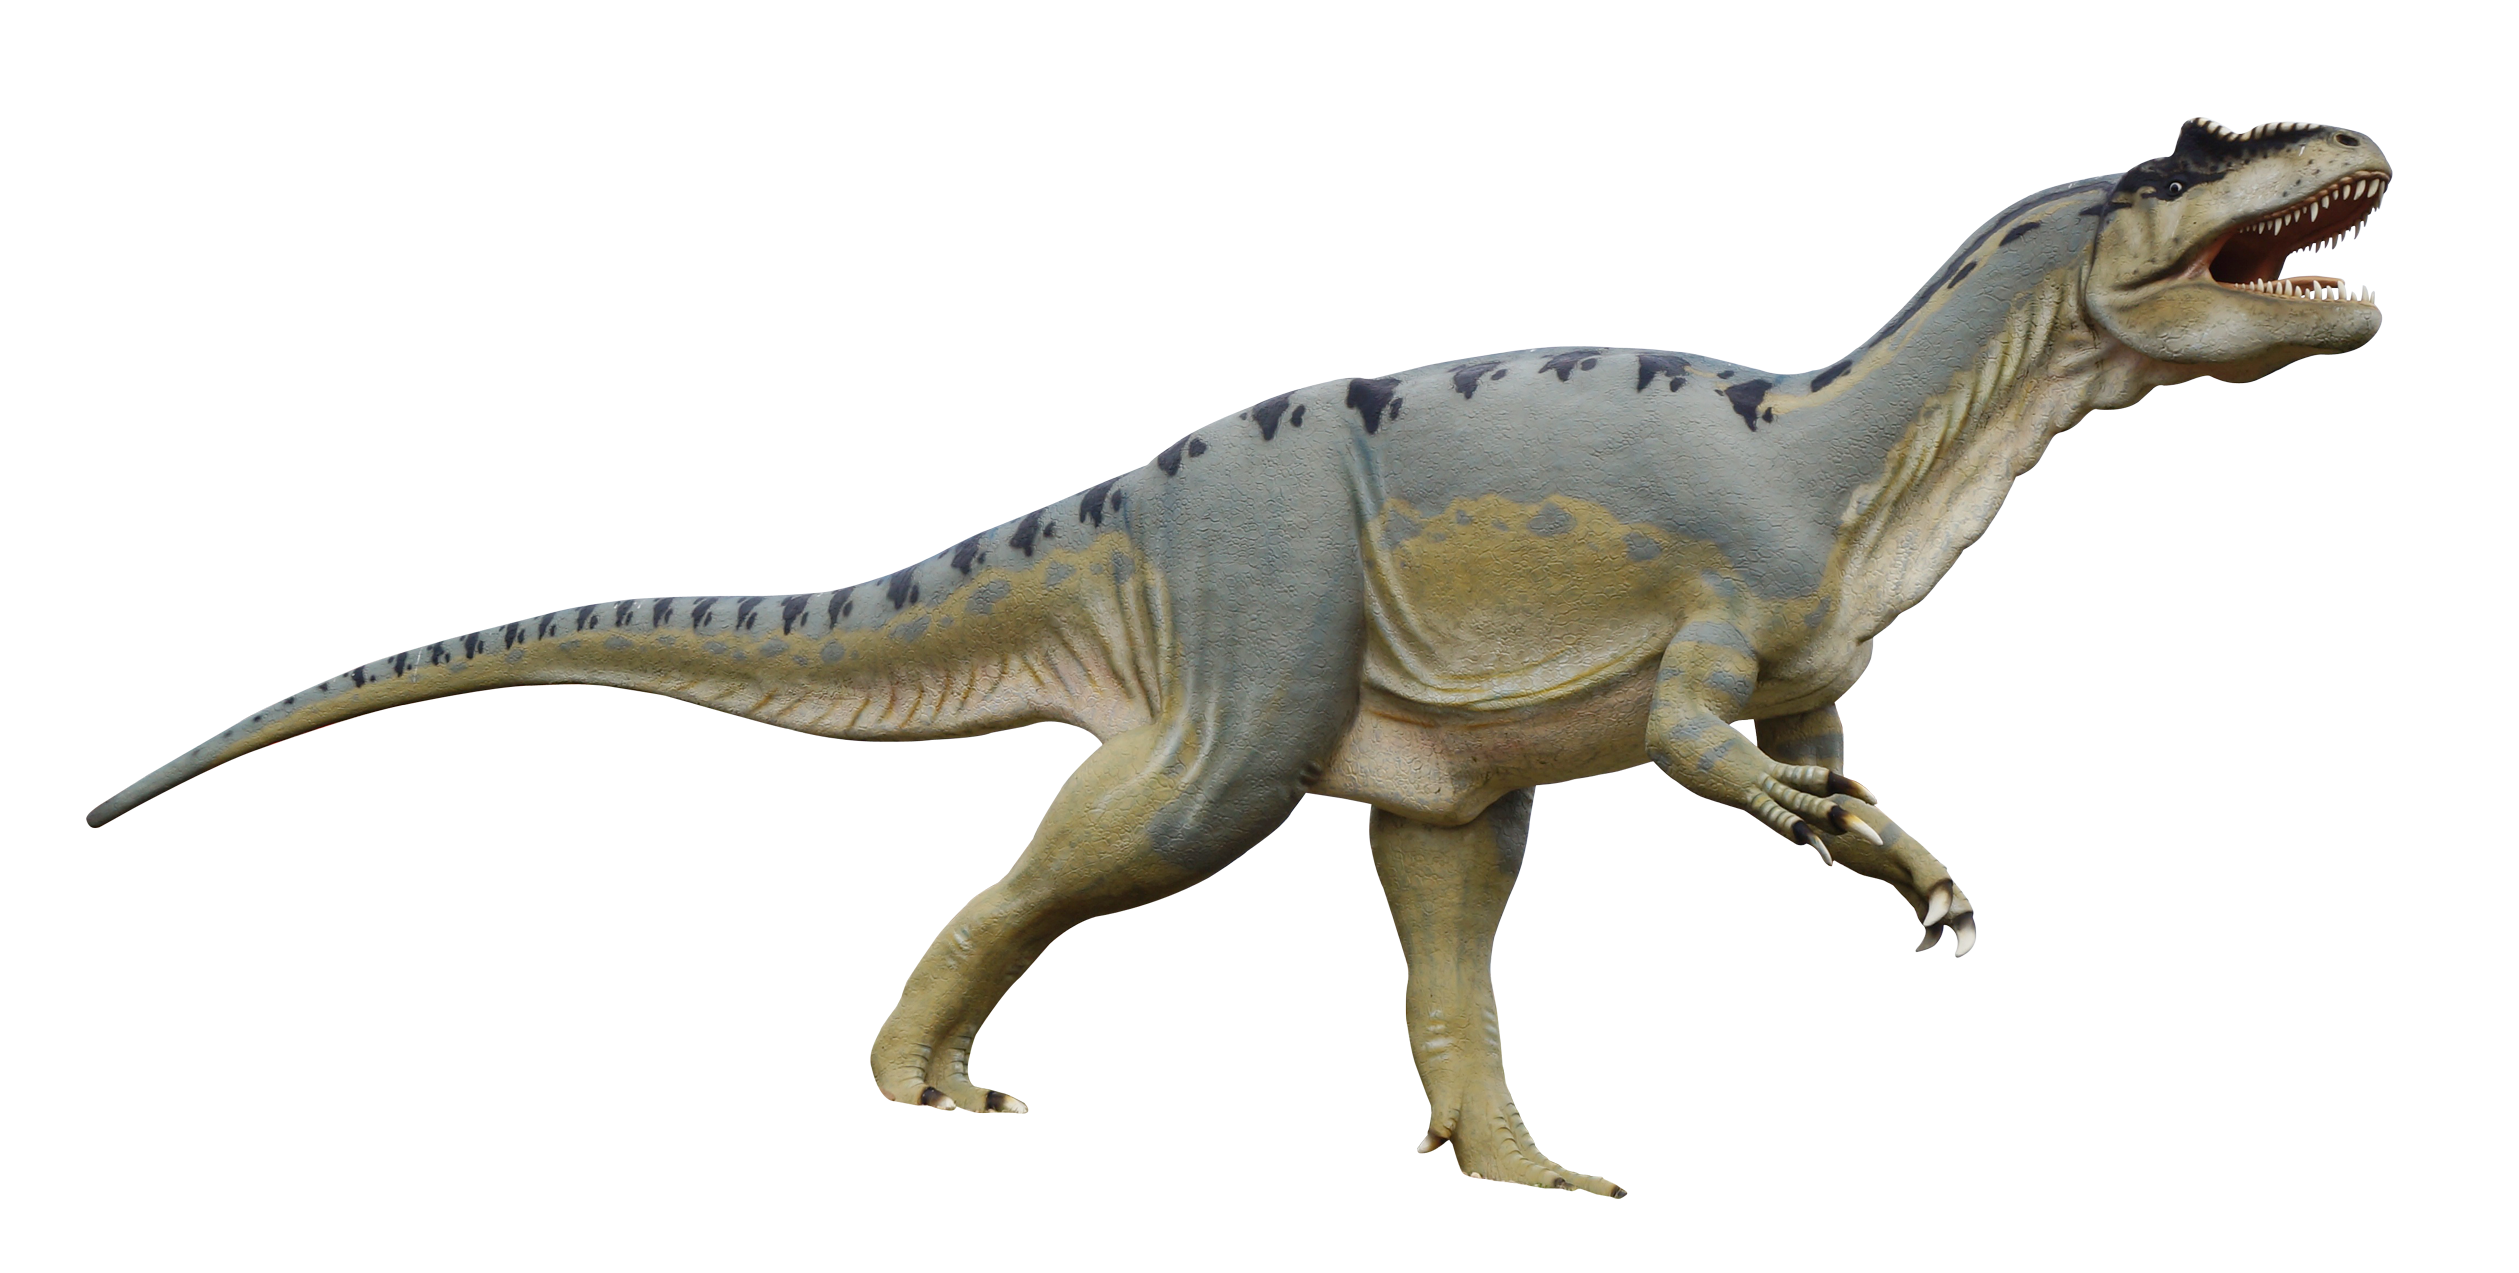 Chrome Dinosaur Png Transparent Library - Chrome Dino Png Transparent PNG -  400x400 - Free Download on NicePNG